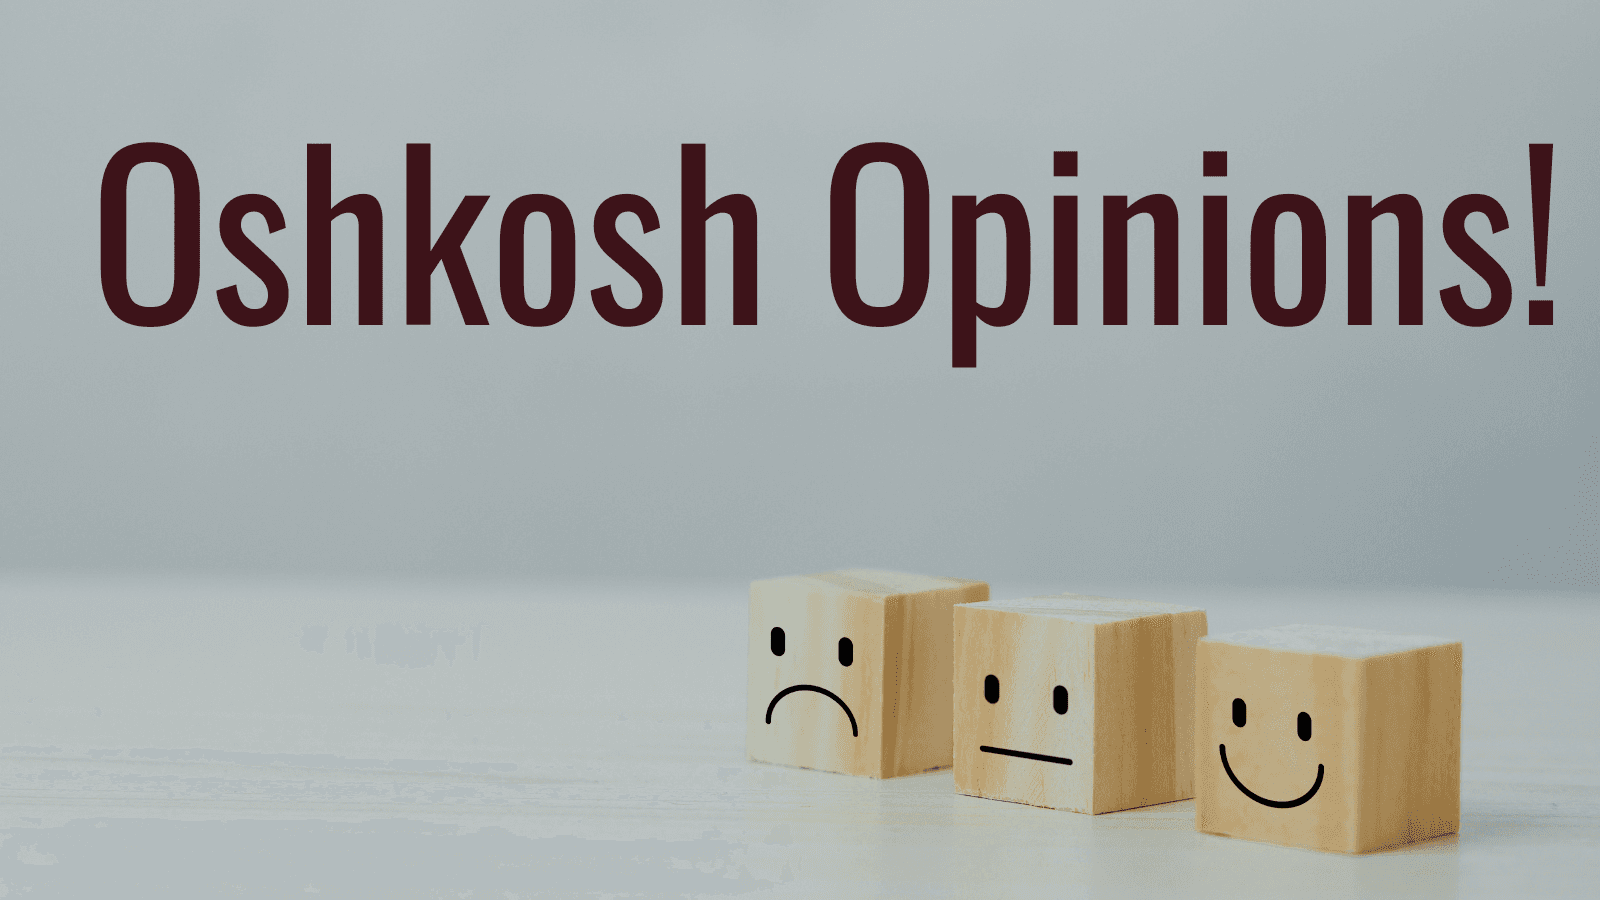 Oshkosh community members offer opinions on making Oshkosh a more positive place